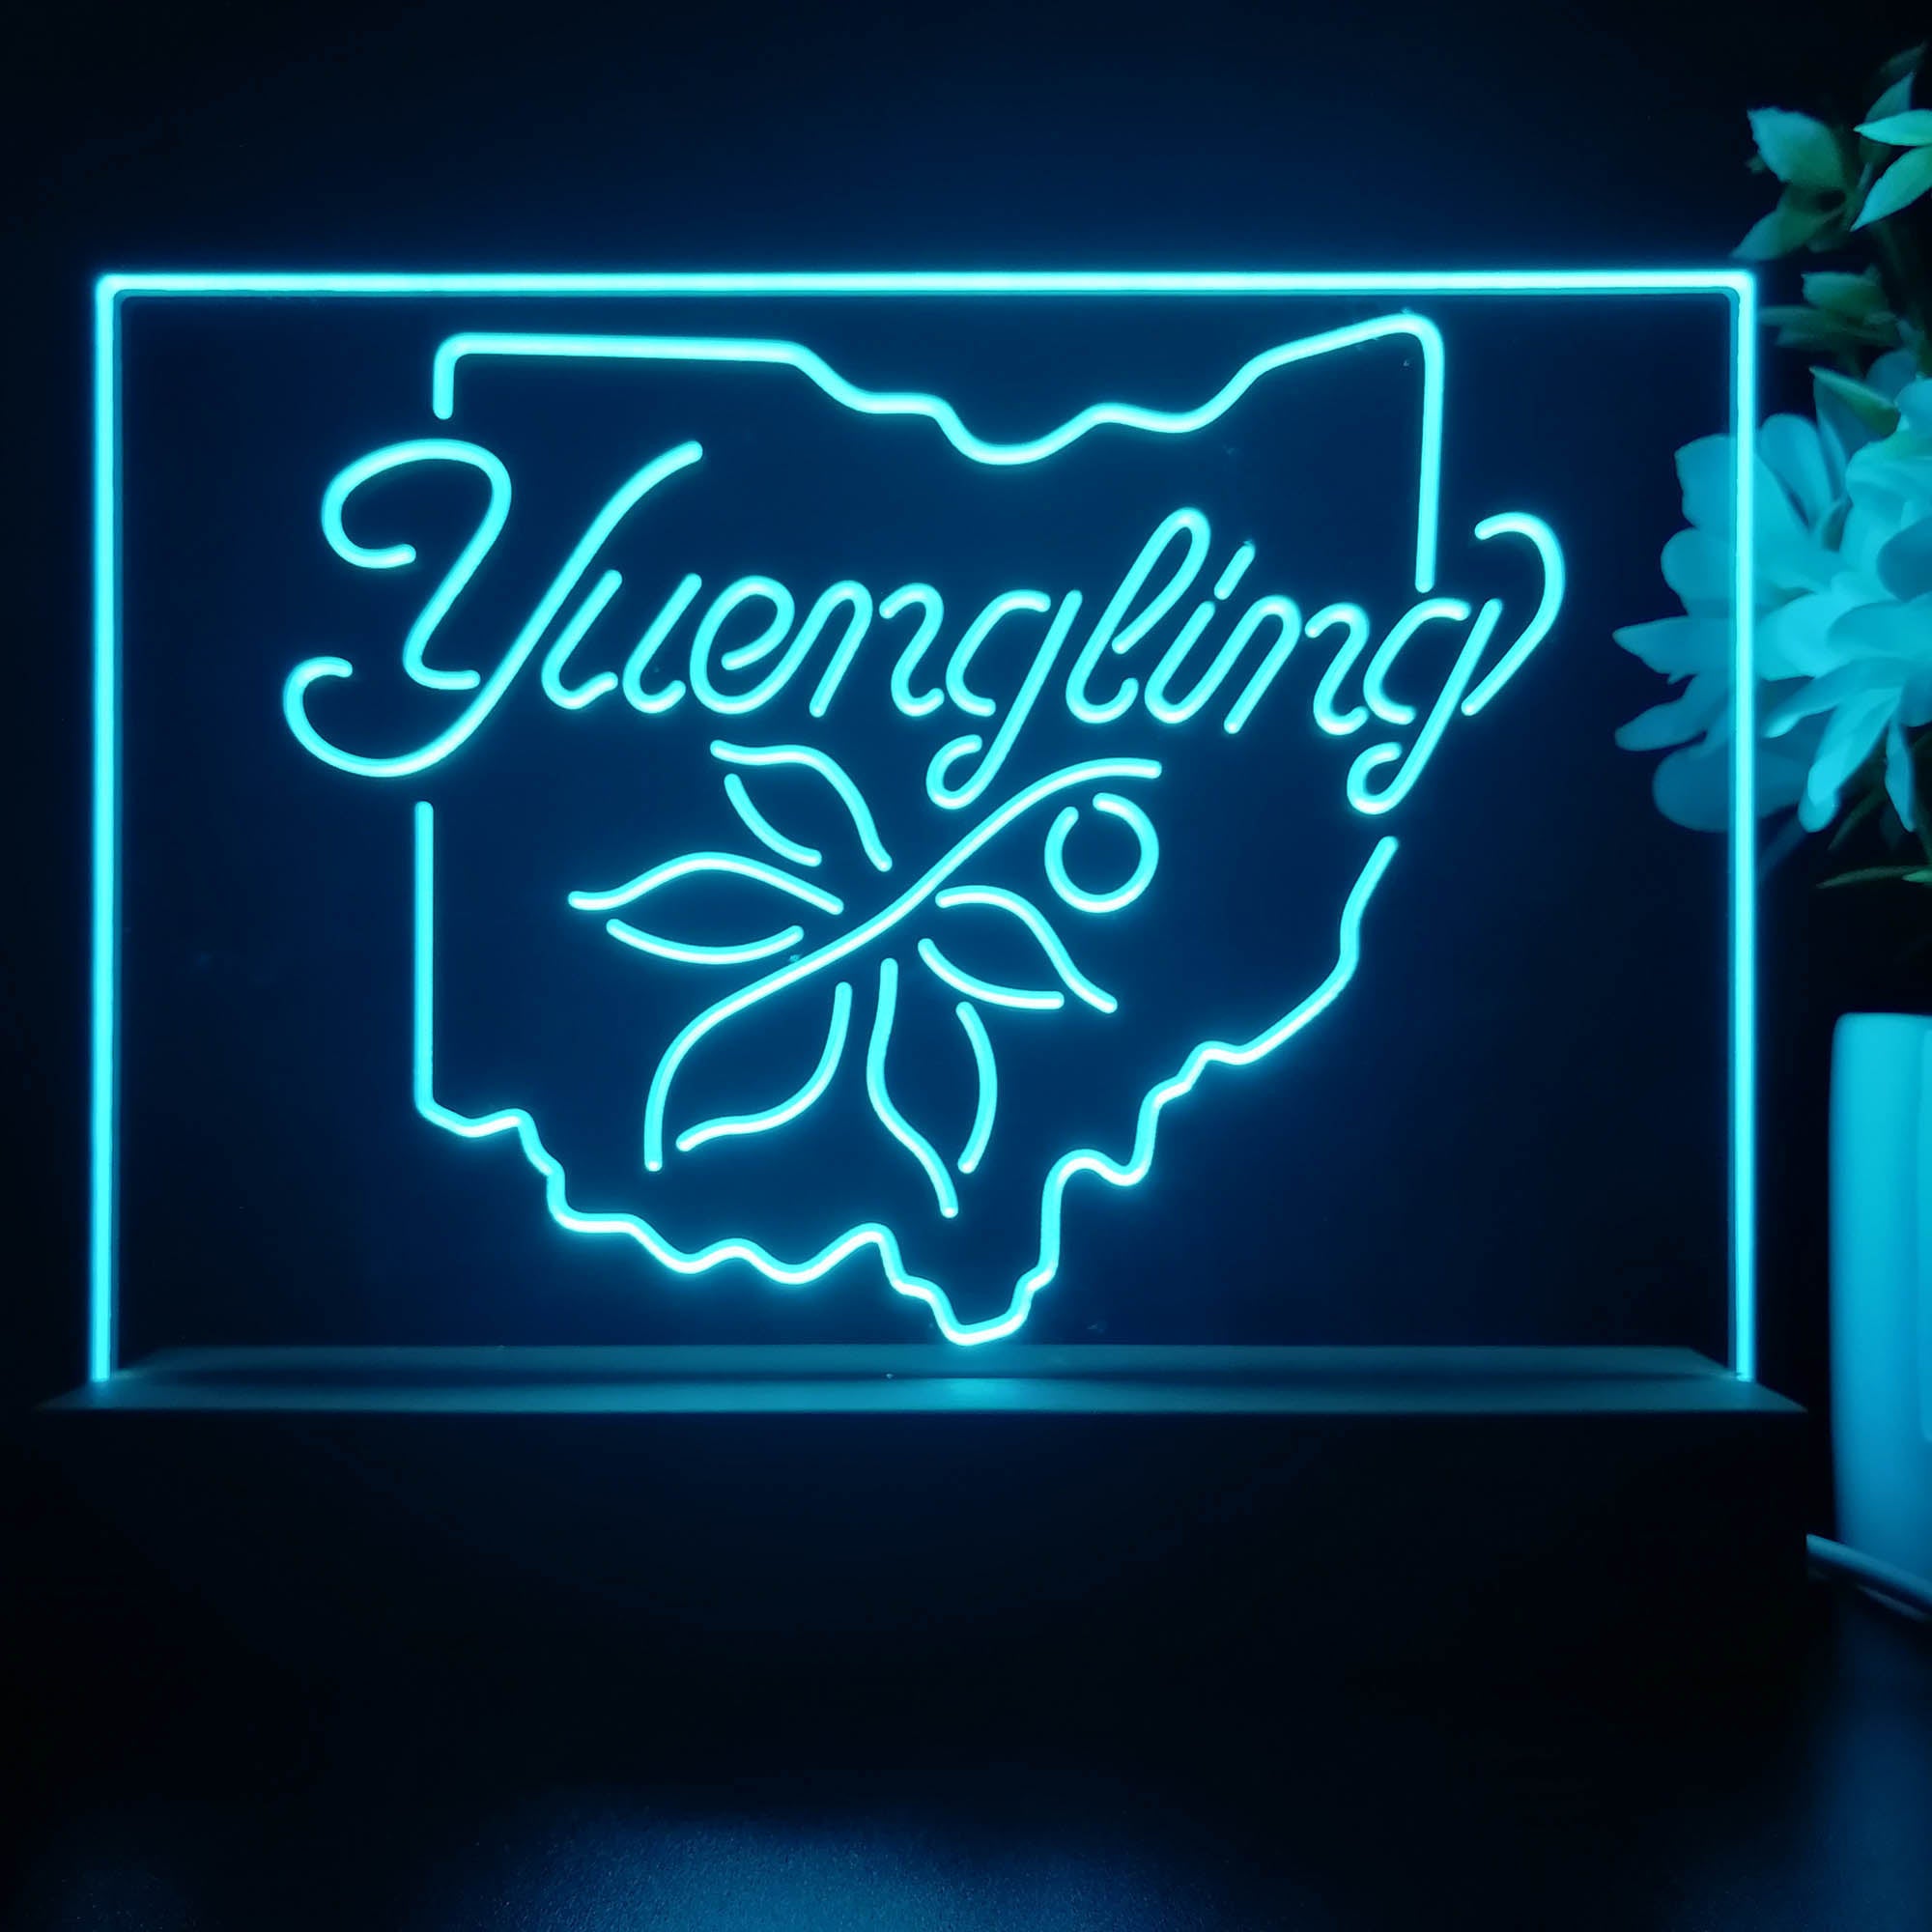 Yuengling Ohio State Buckeye Larger Beer Neon Sign Pub Bar Lamp